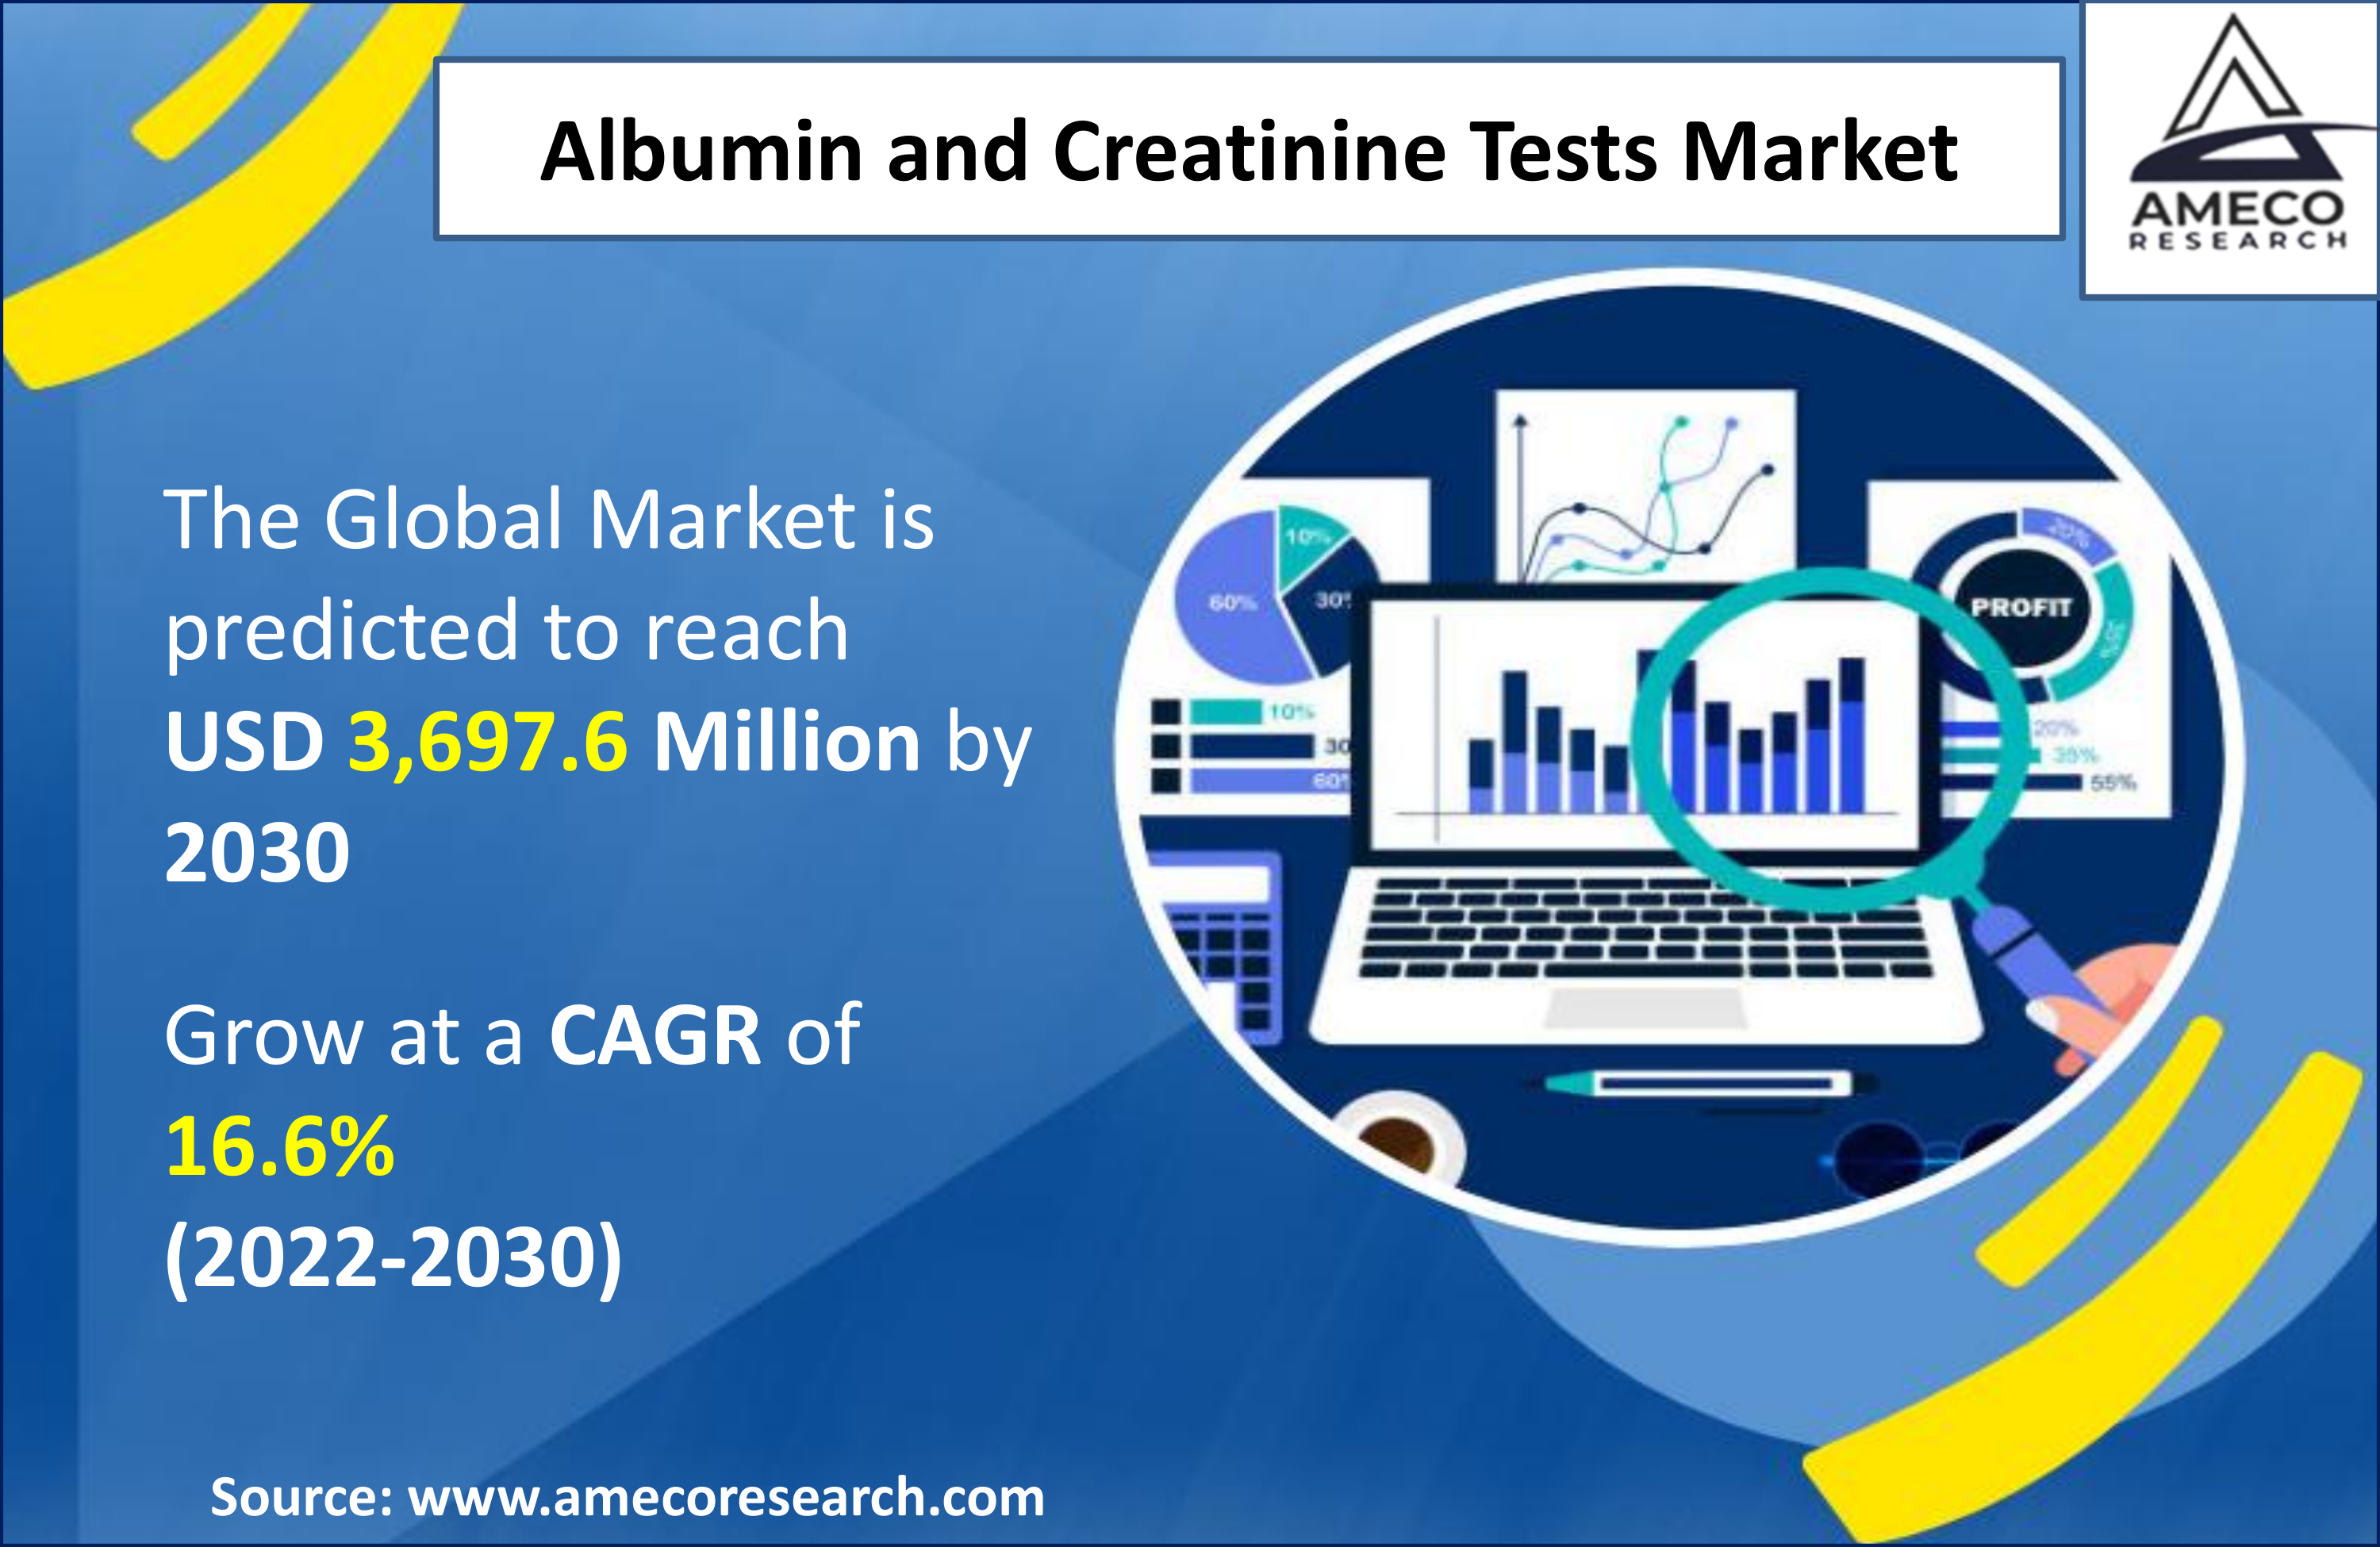 Albumin and Creatinine Tests Market